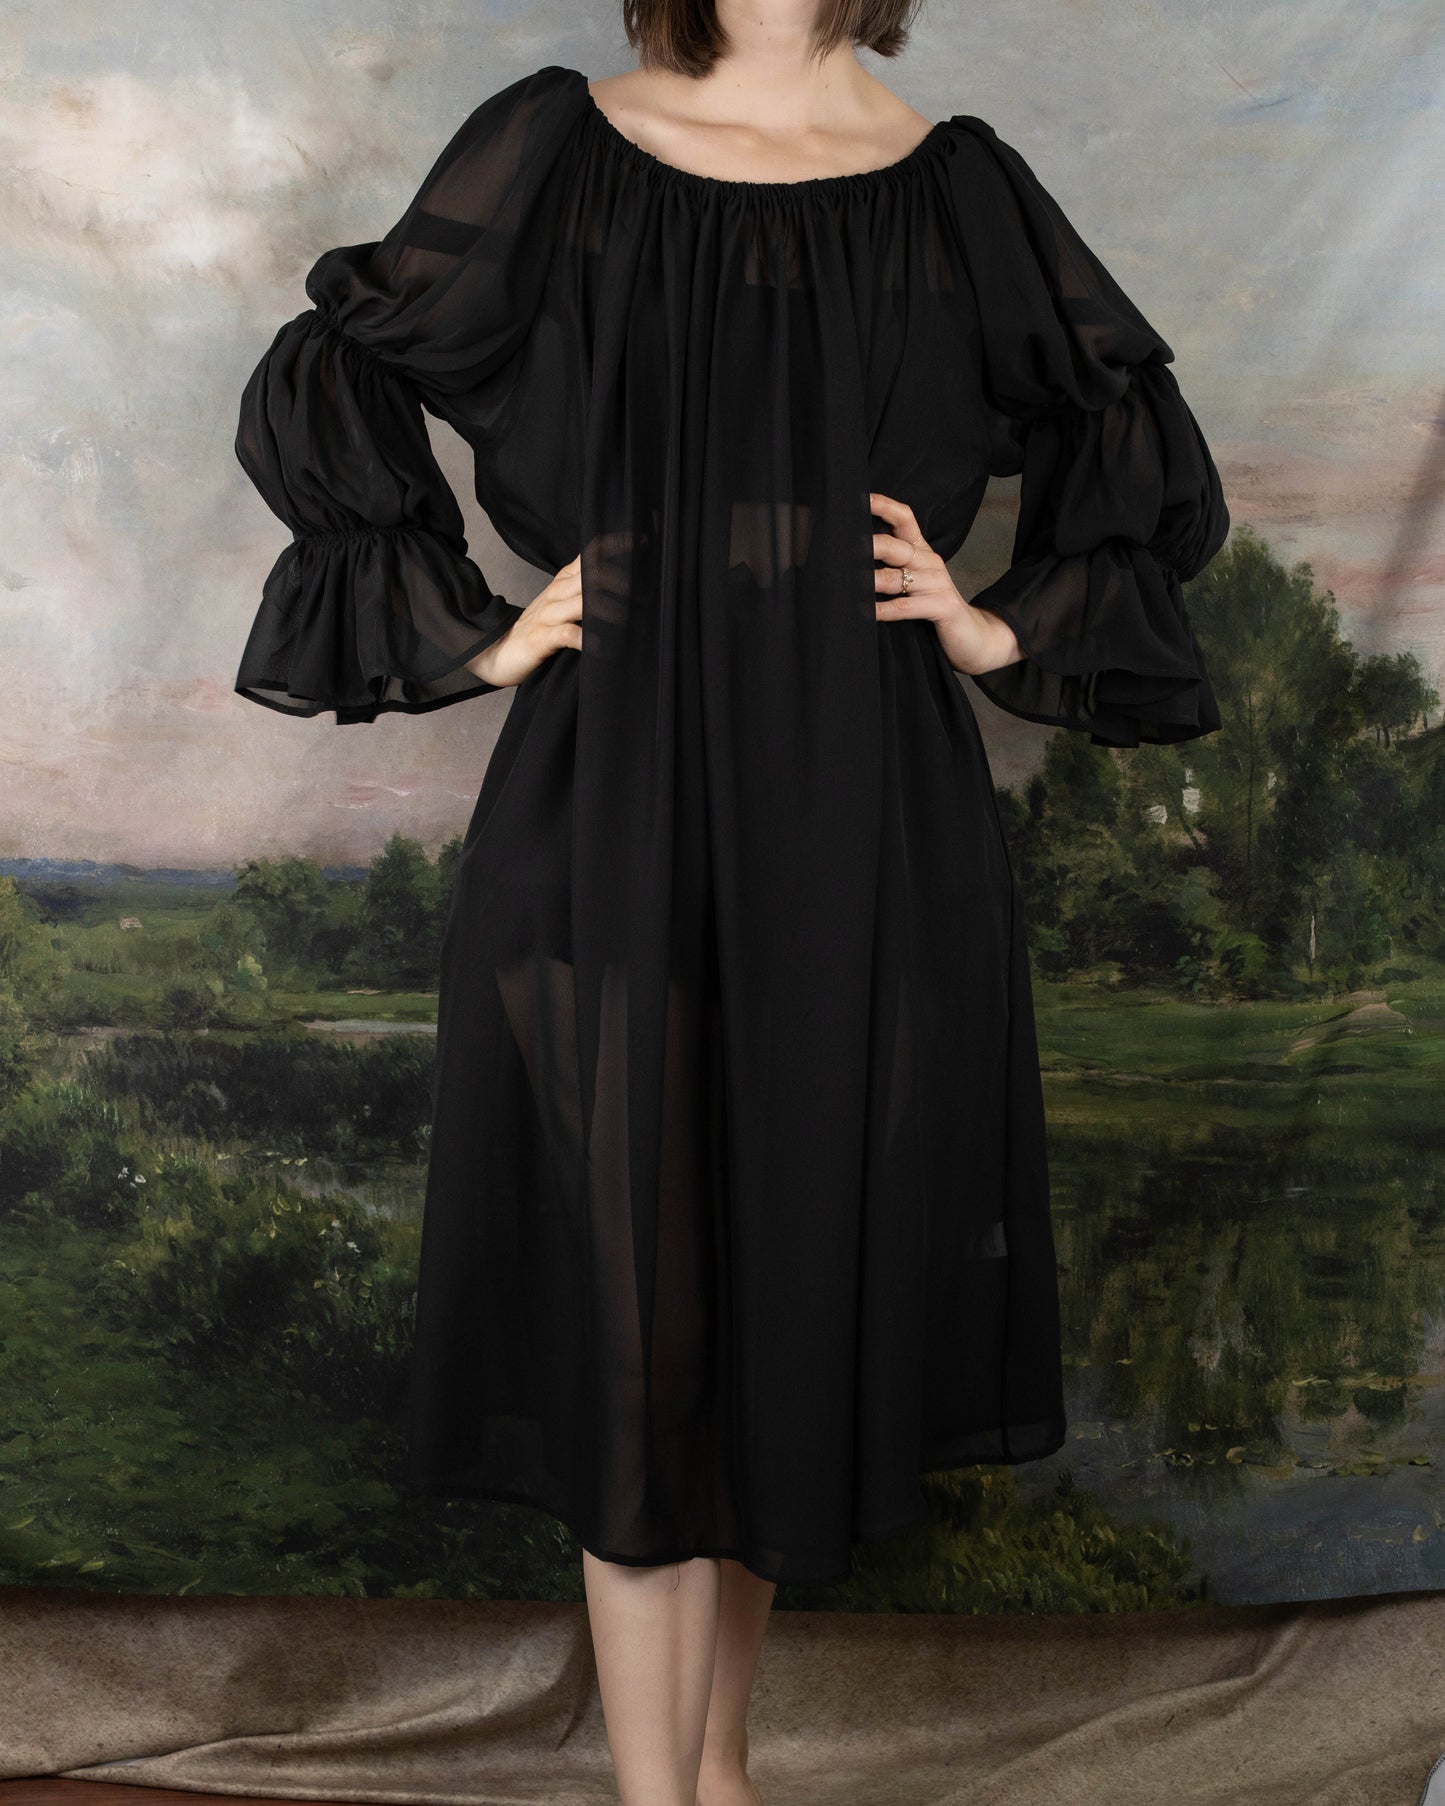 model wearing sheer black witch dress